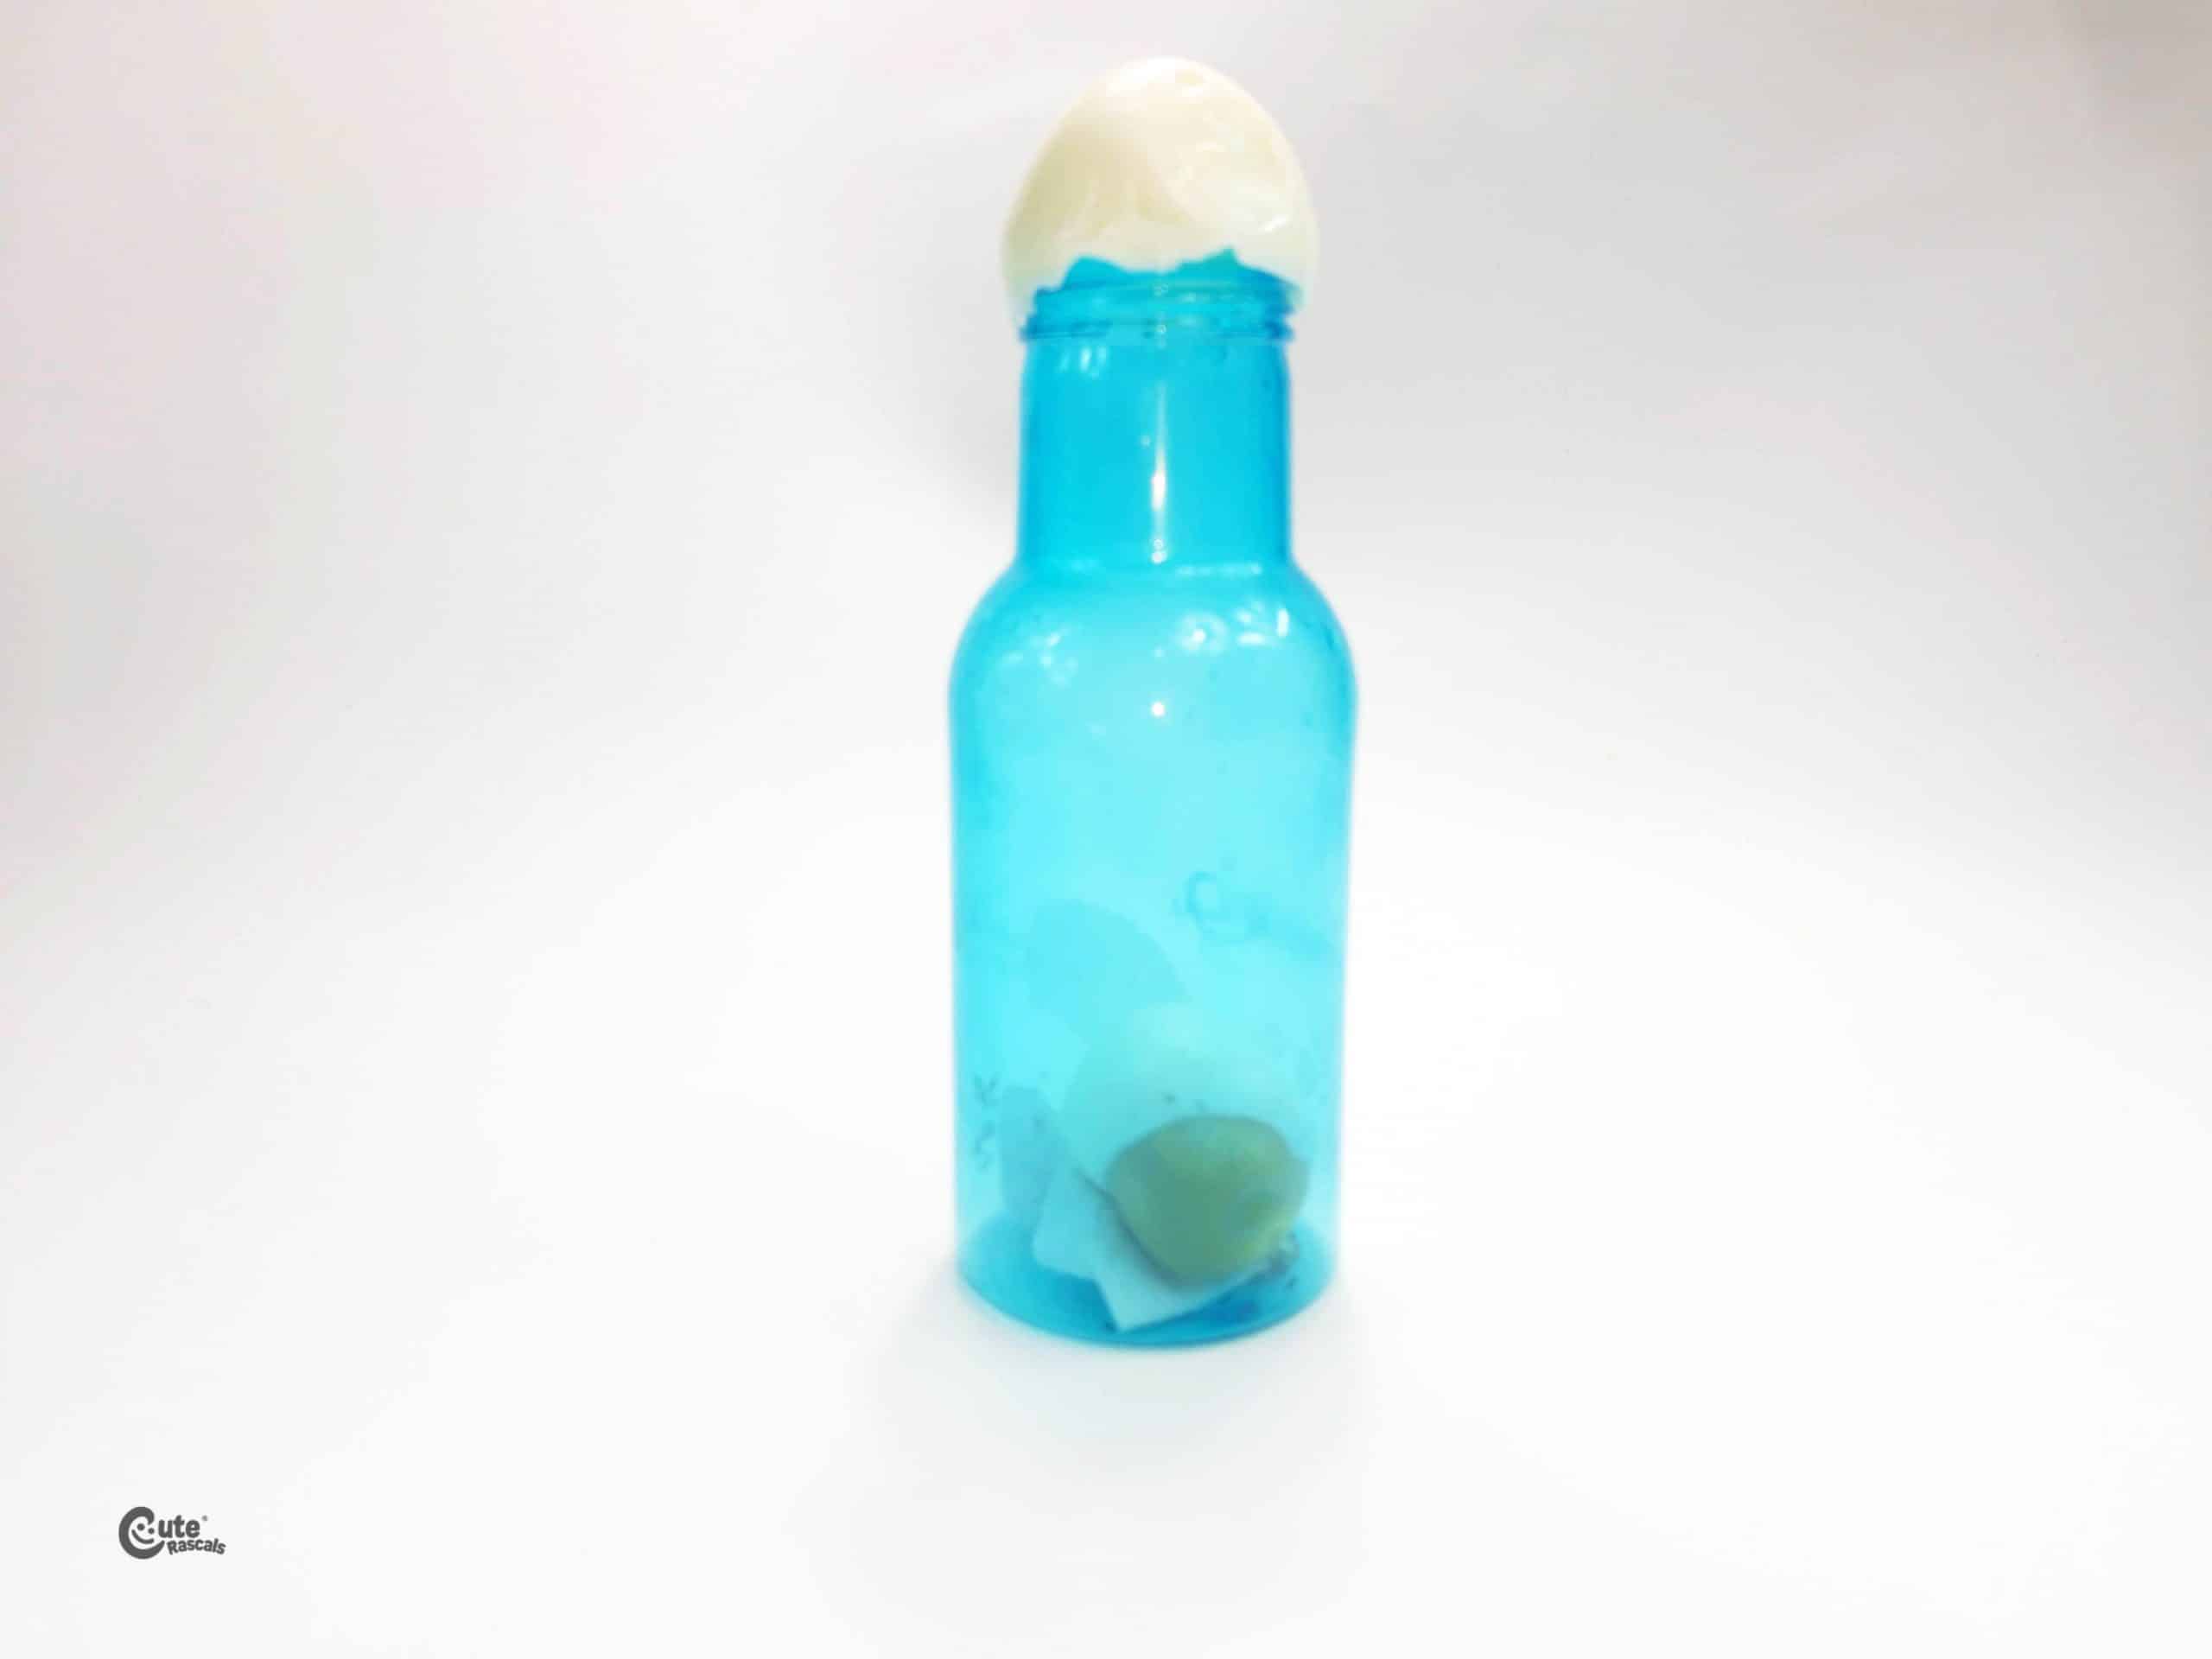 Egg inside a bottle Easter science experiments for preschoolers